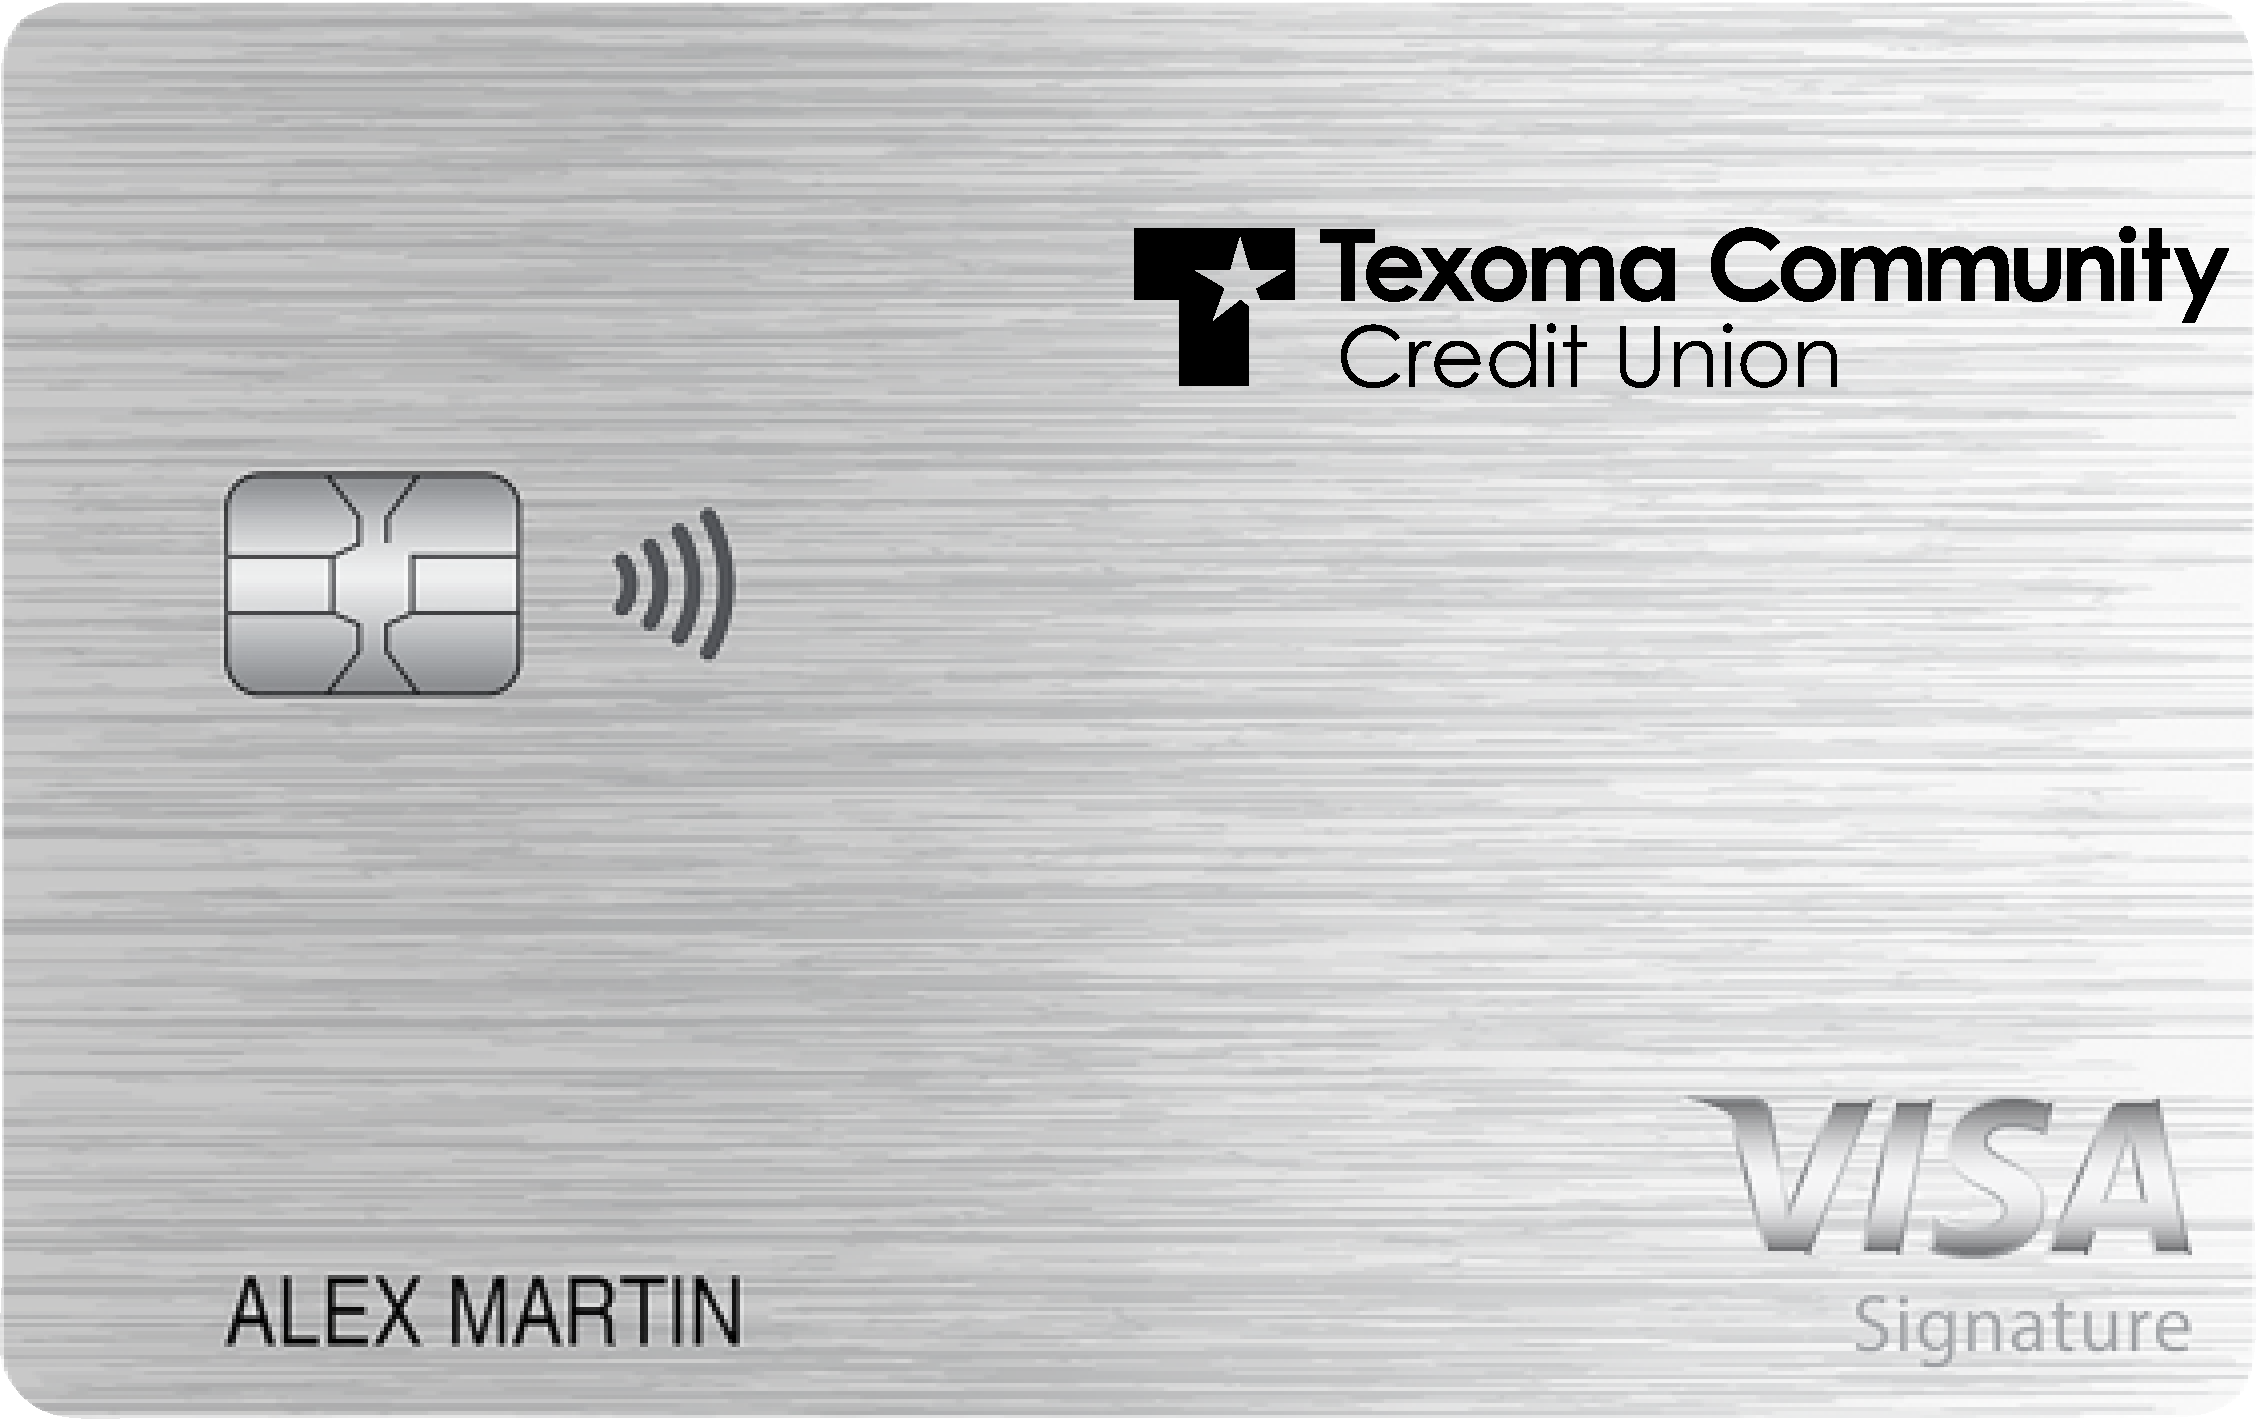 Texoma Community Credit Union